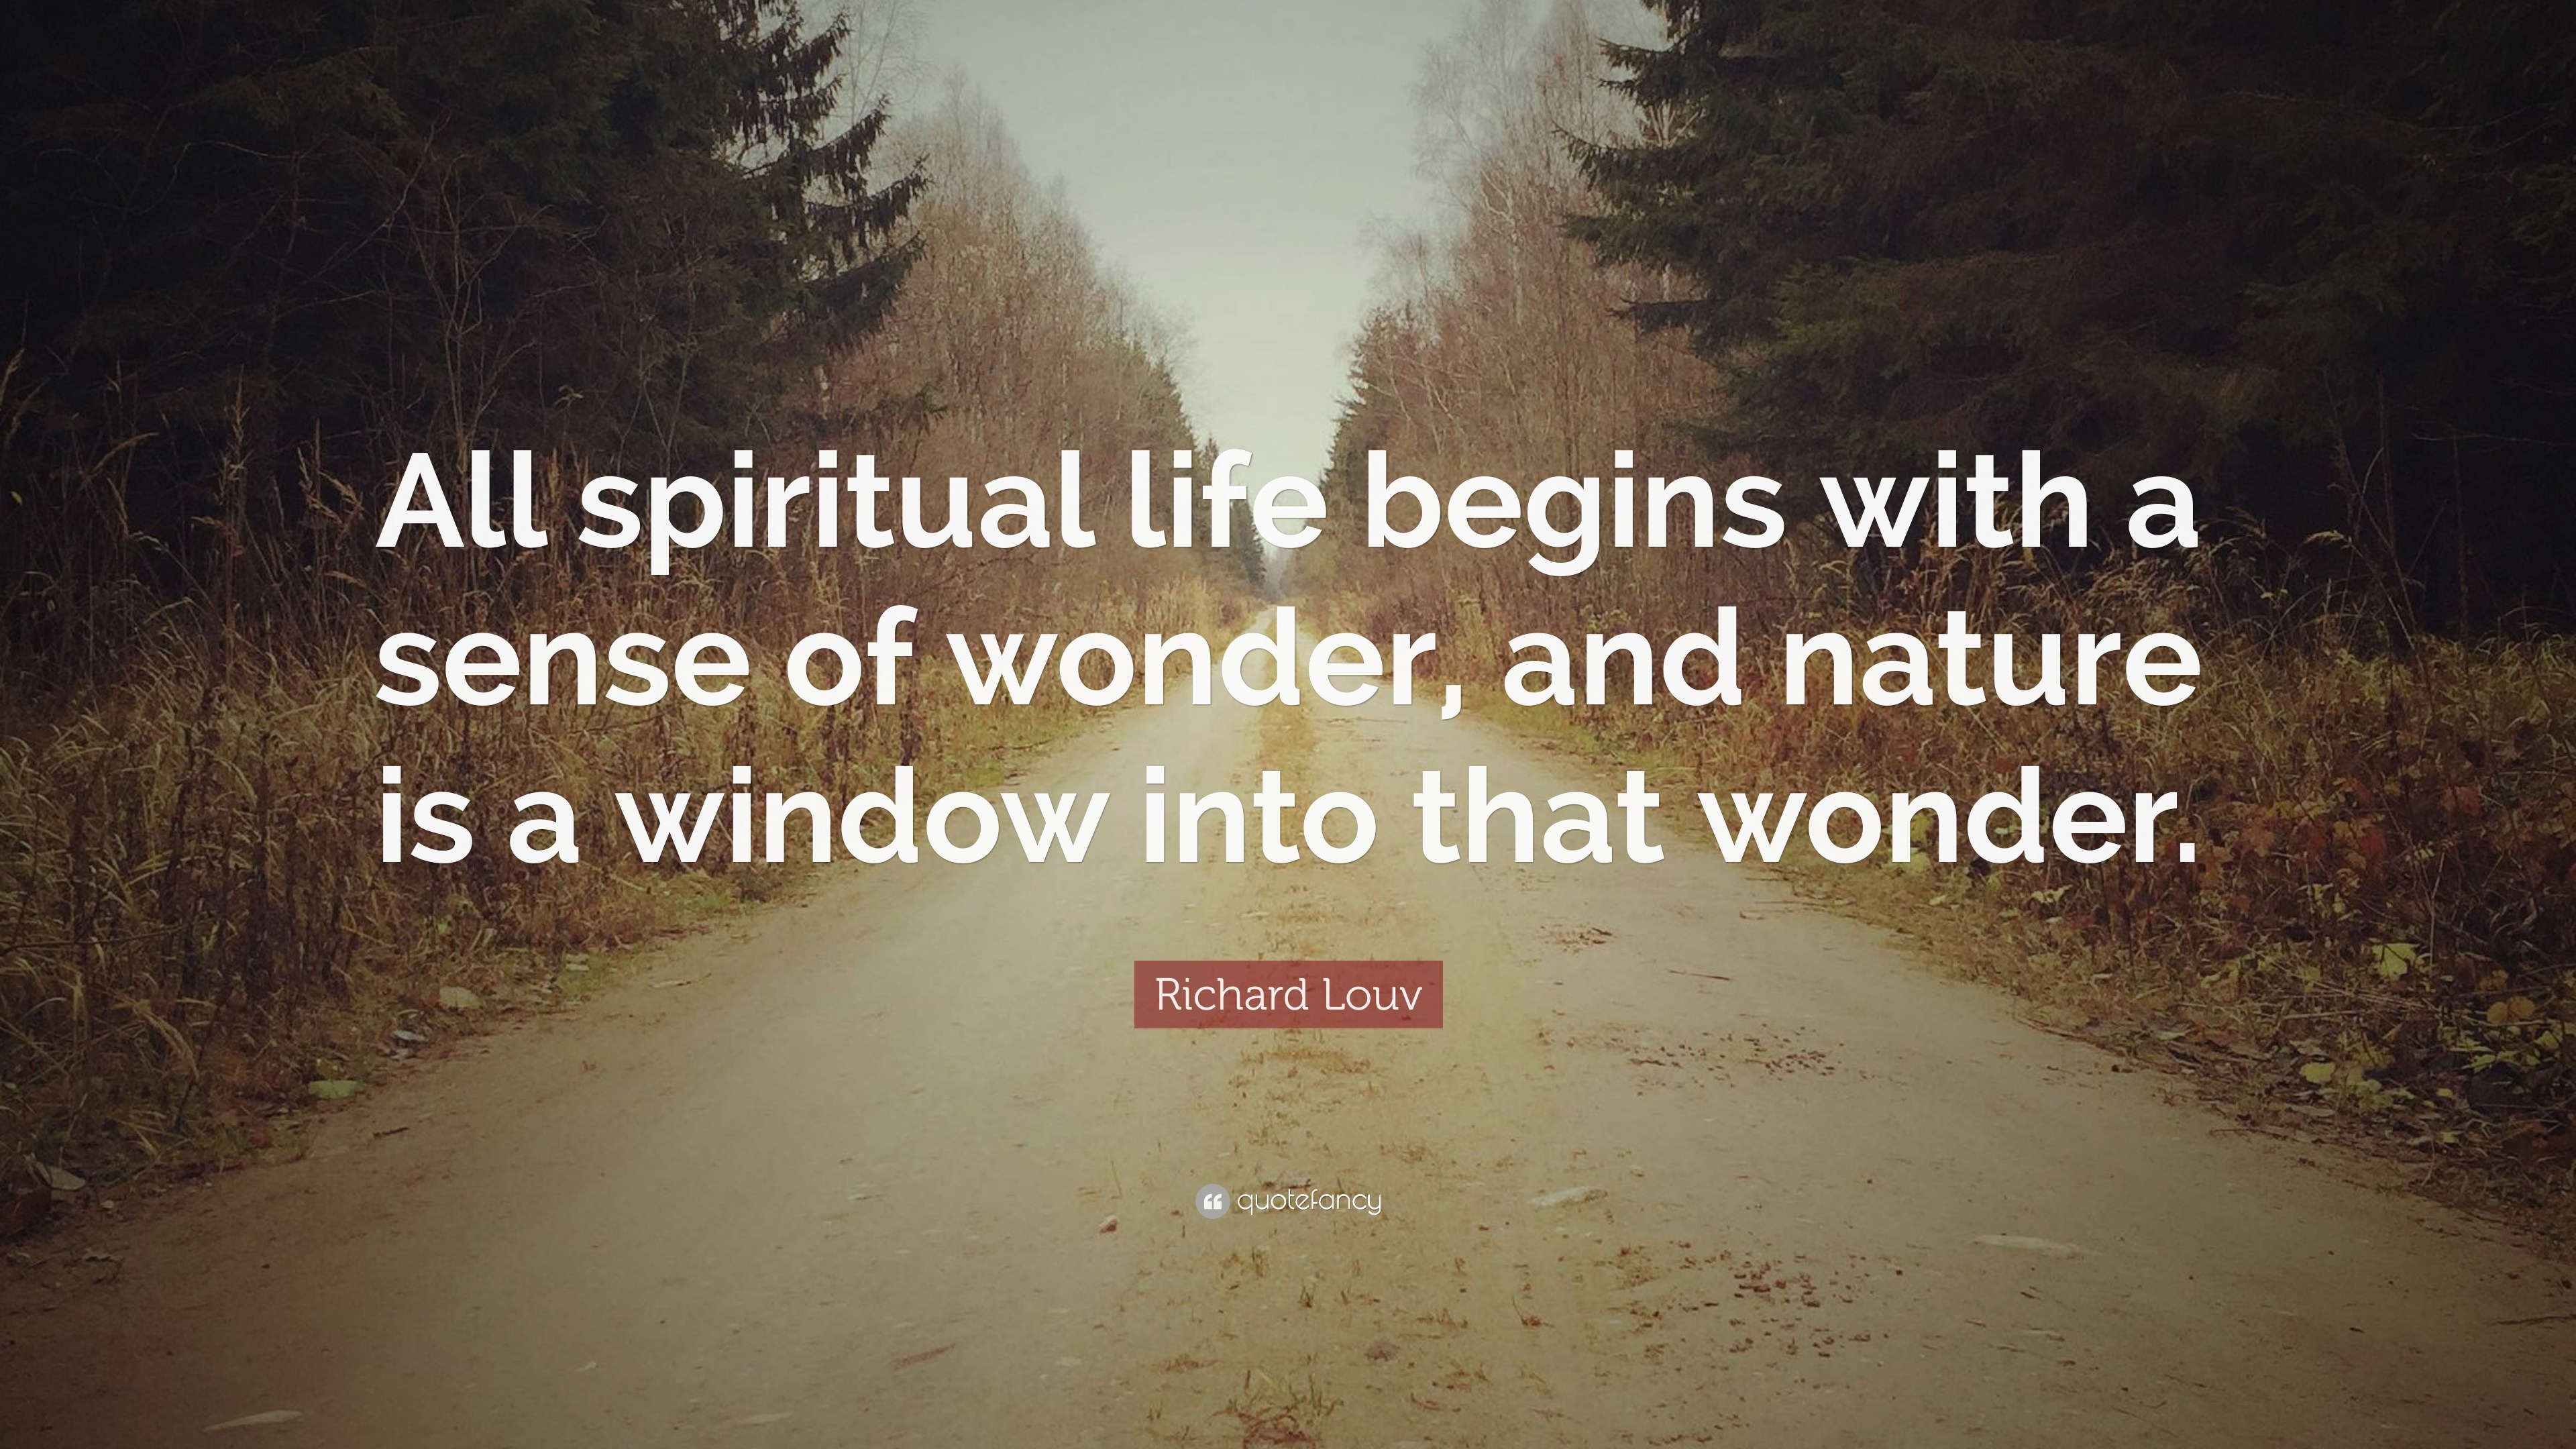 Richard Louv Quote: “All spiritual life begins with a sense of wonder